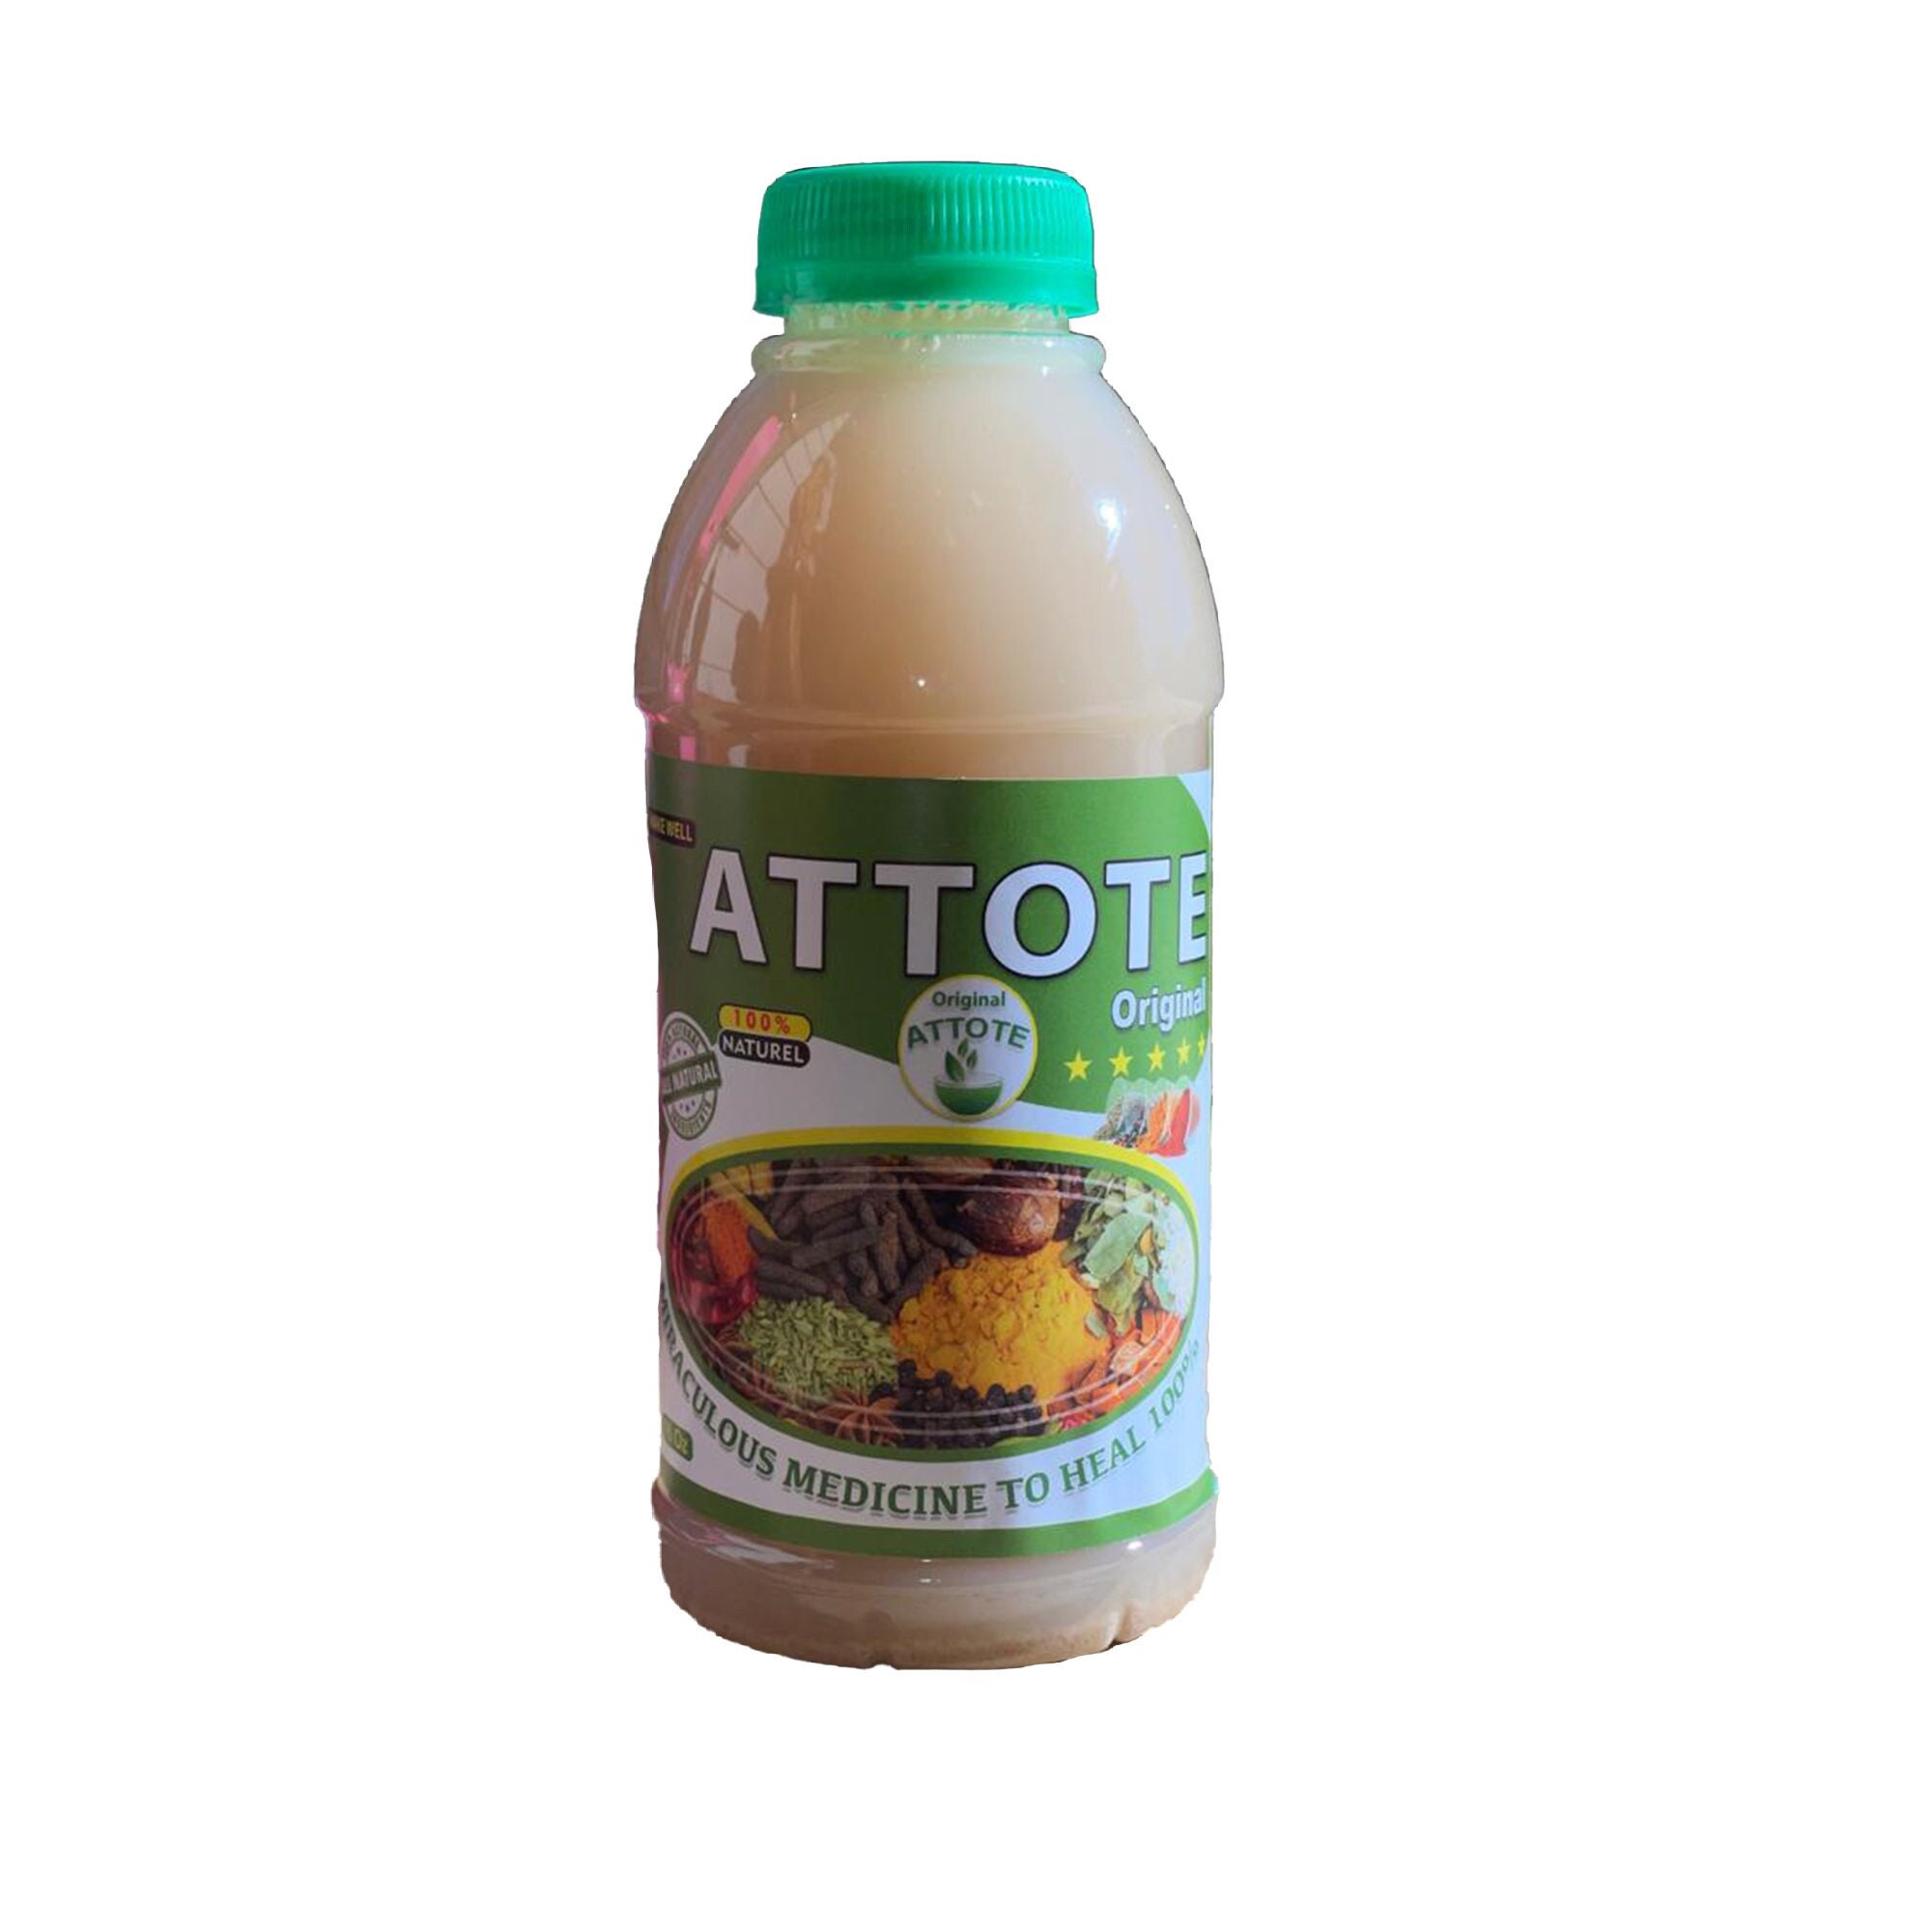 ATTOTE ORIGINAL 100% Organic Natural Herbal Drink / Ivory Coast / 16oz 